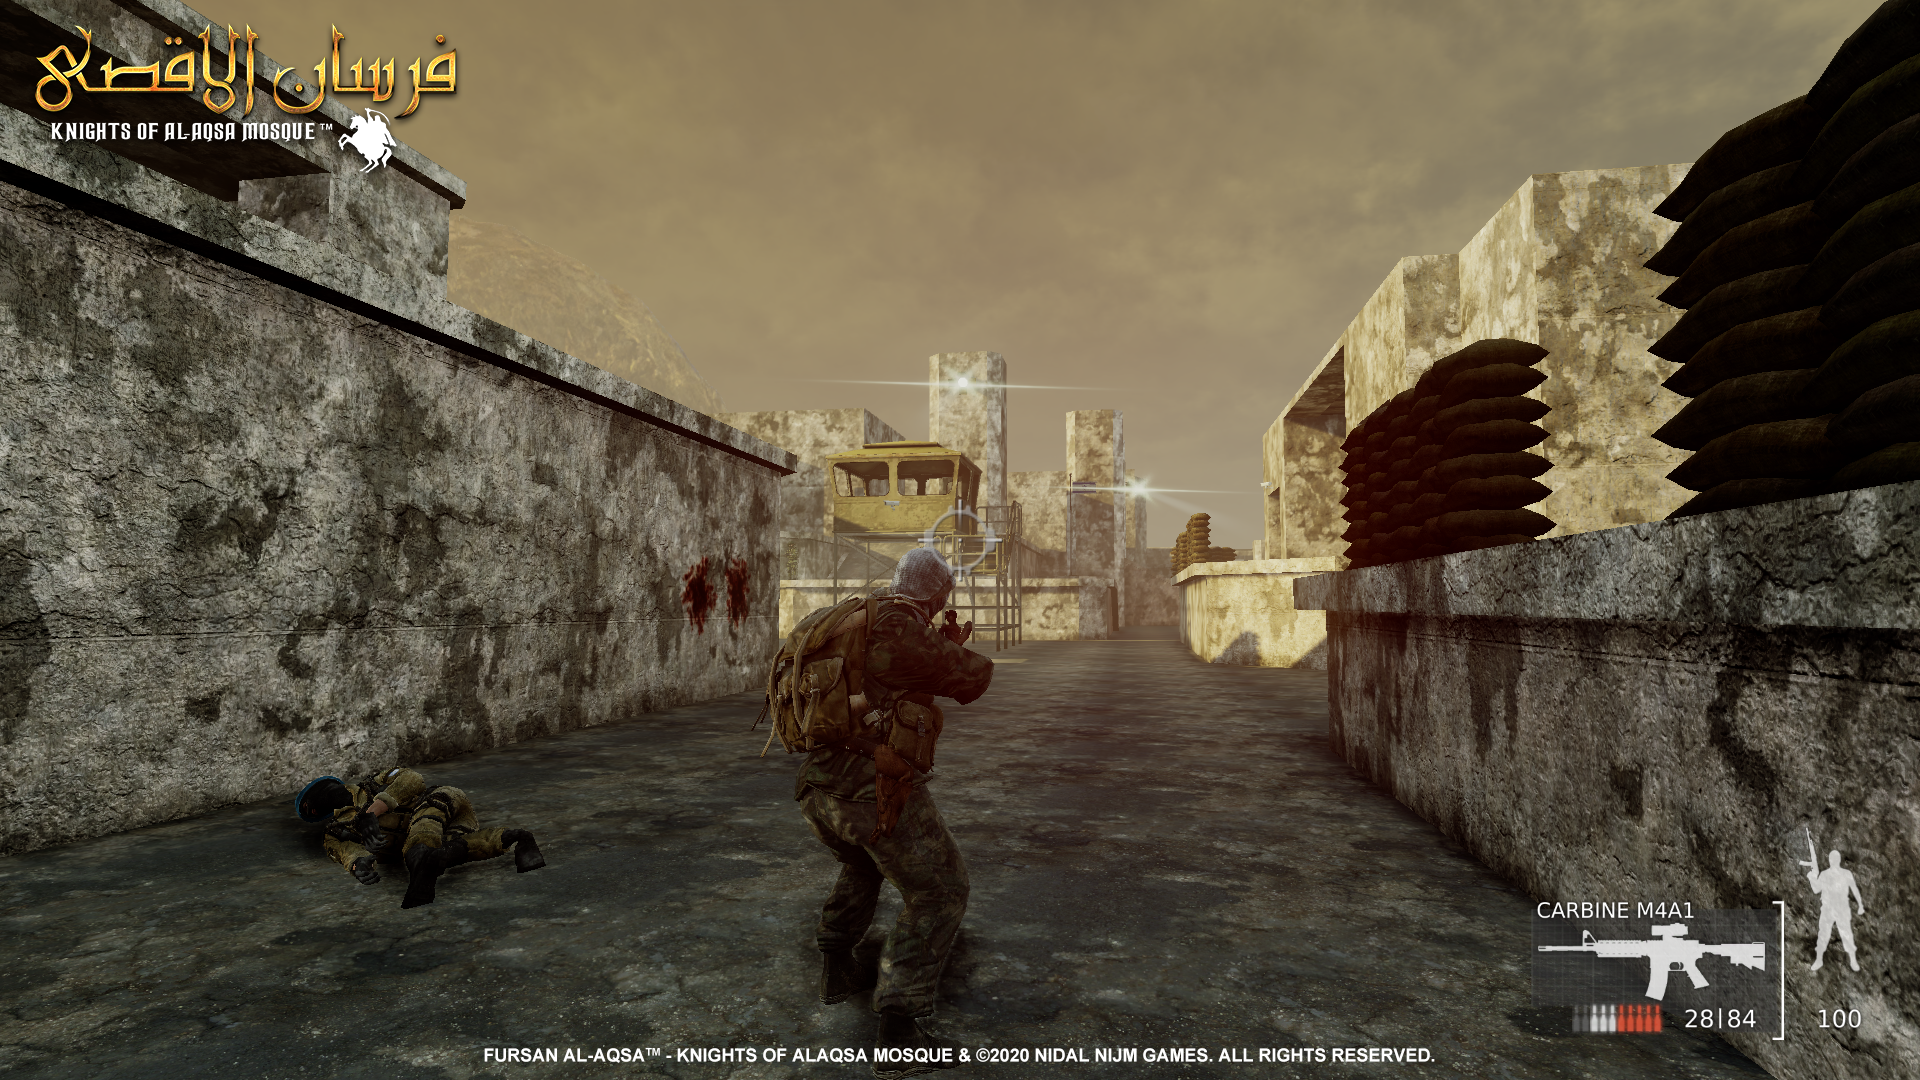 Fursan alAqsa  Showcase Camp Ariel Sharo 2 - I am developing a game about Palestine Resistance